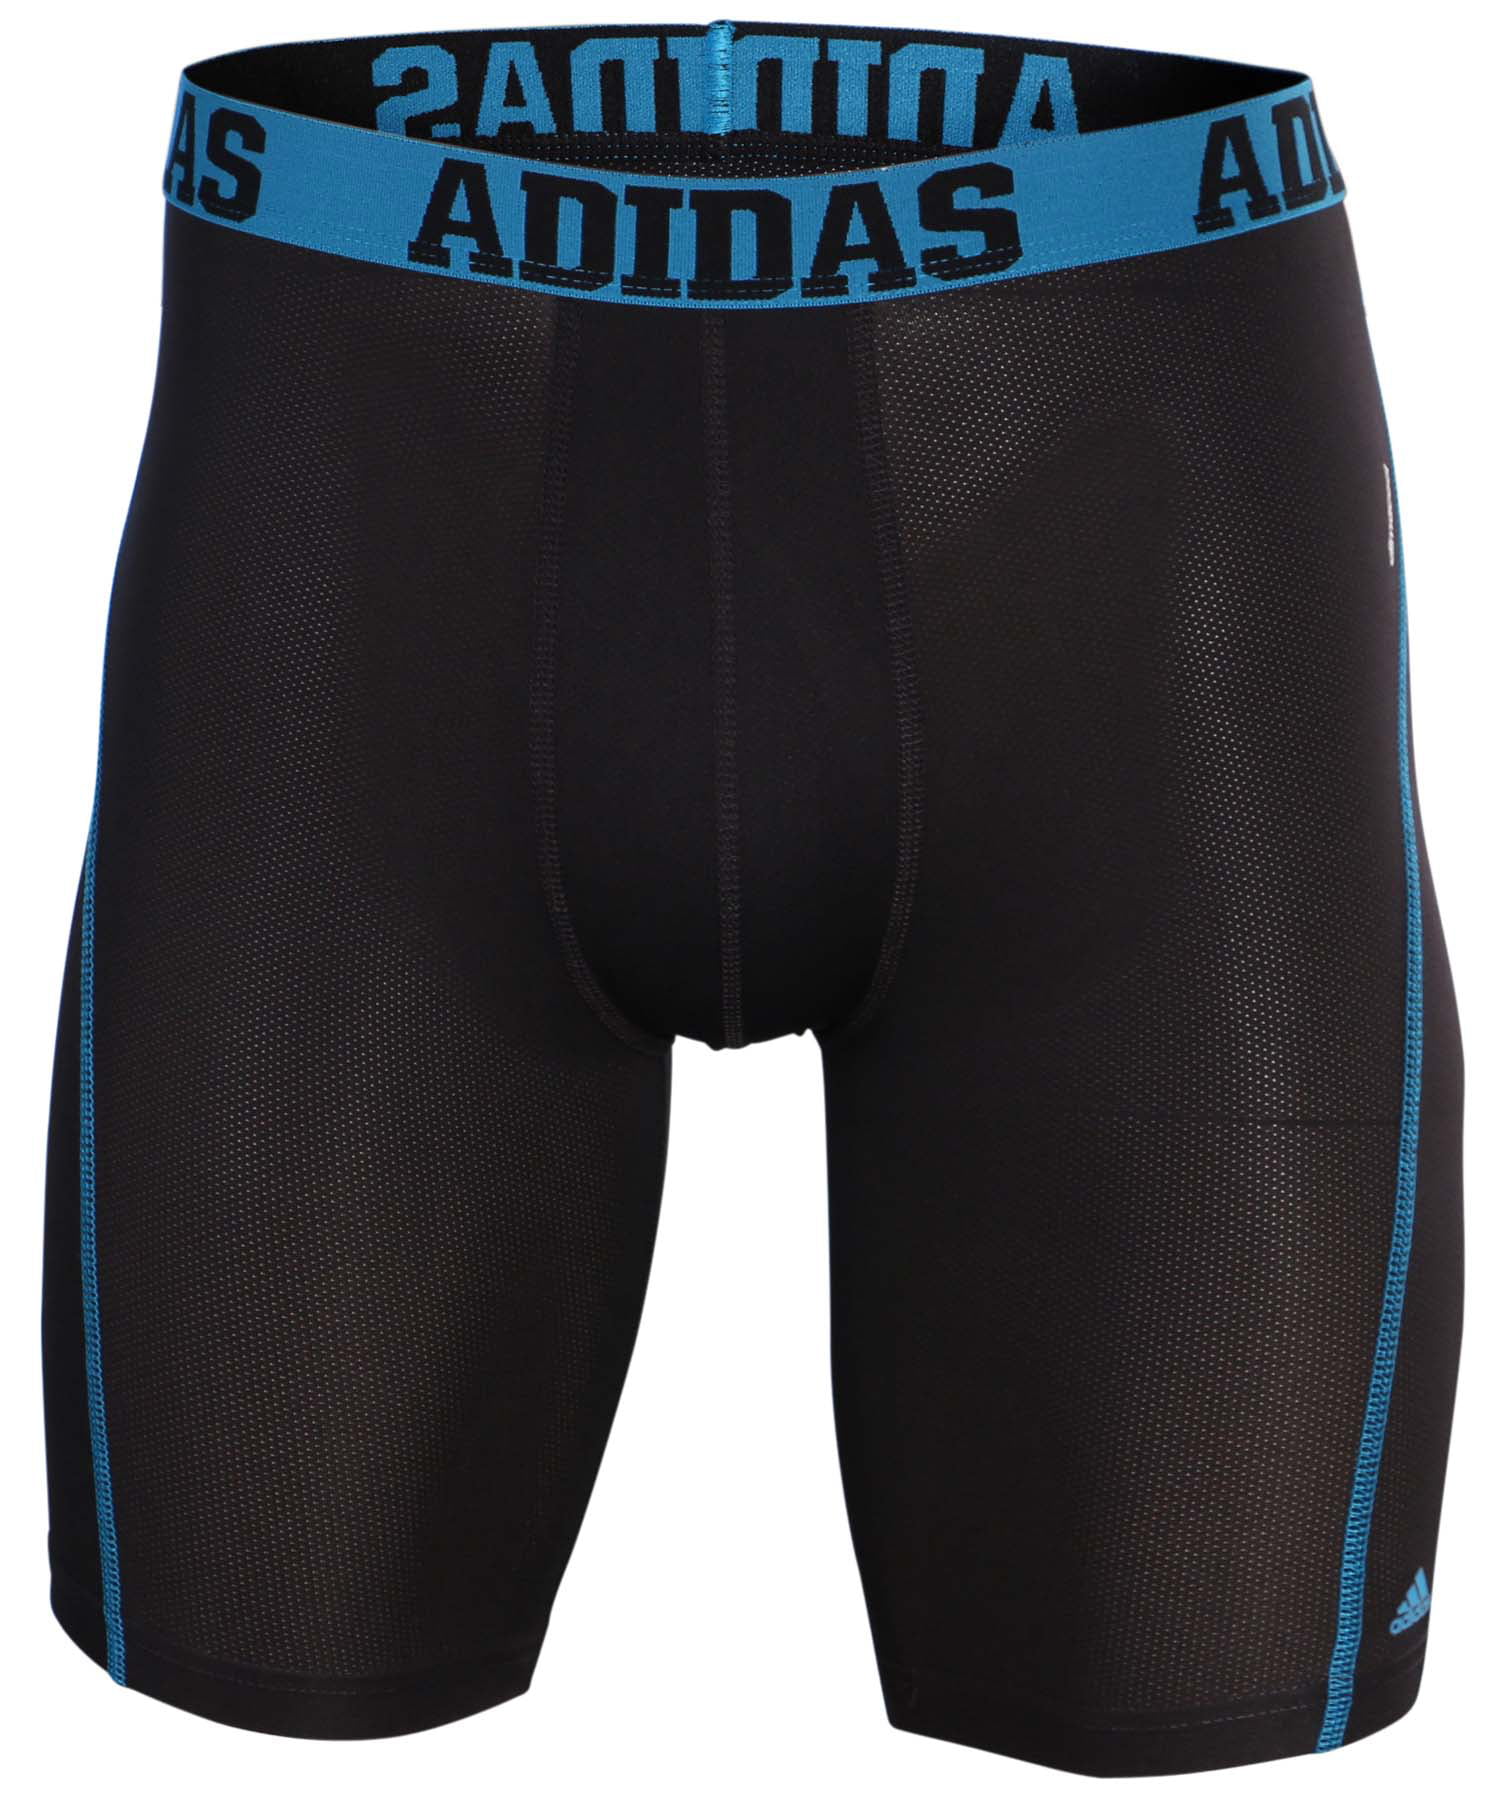 Adidas - Adidas Men's (2Pk) 9" Midway Climacool Underwear - Walmart.com